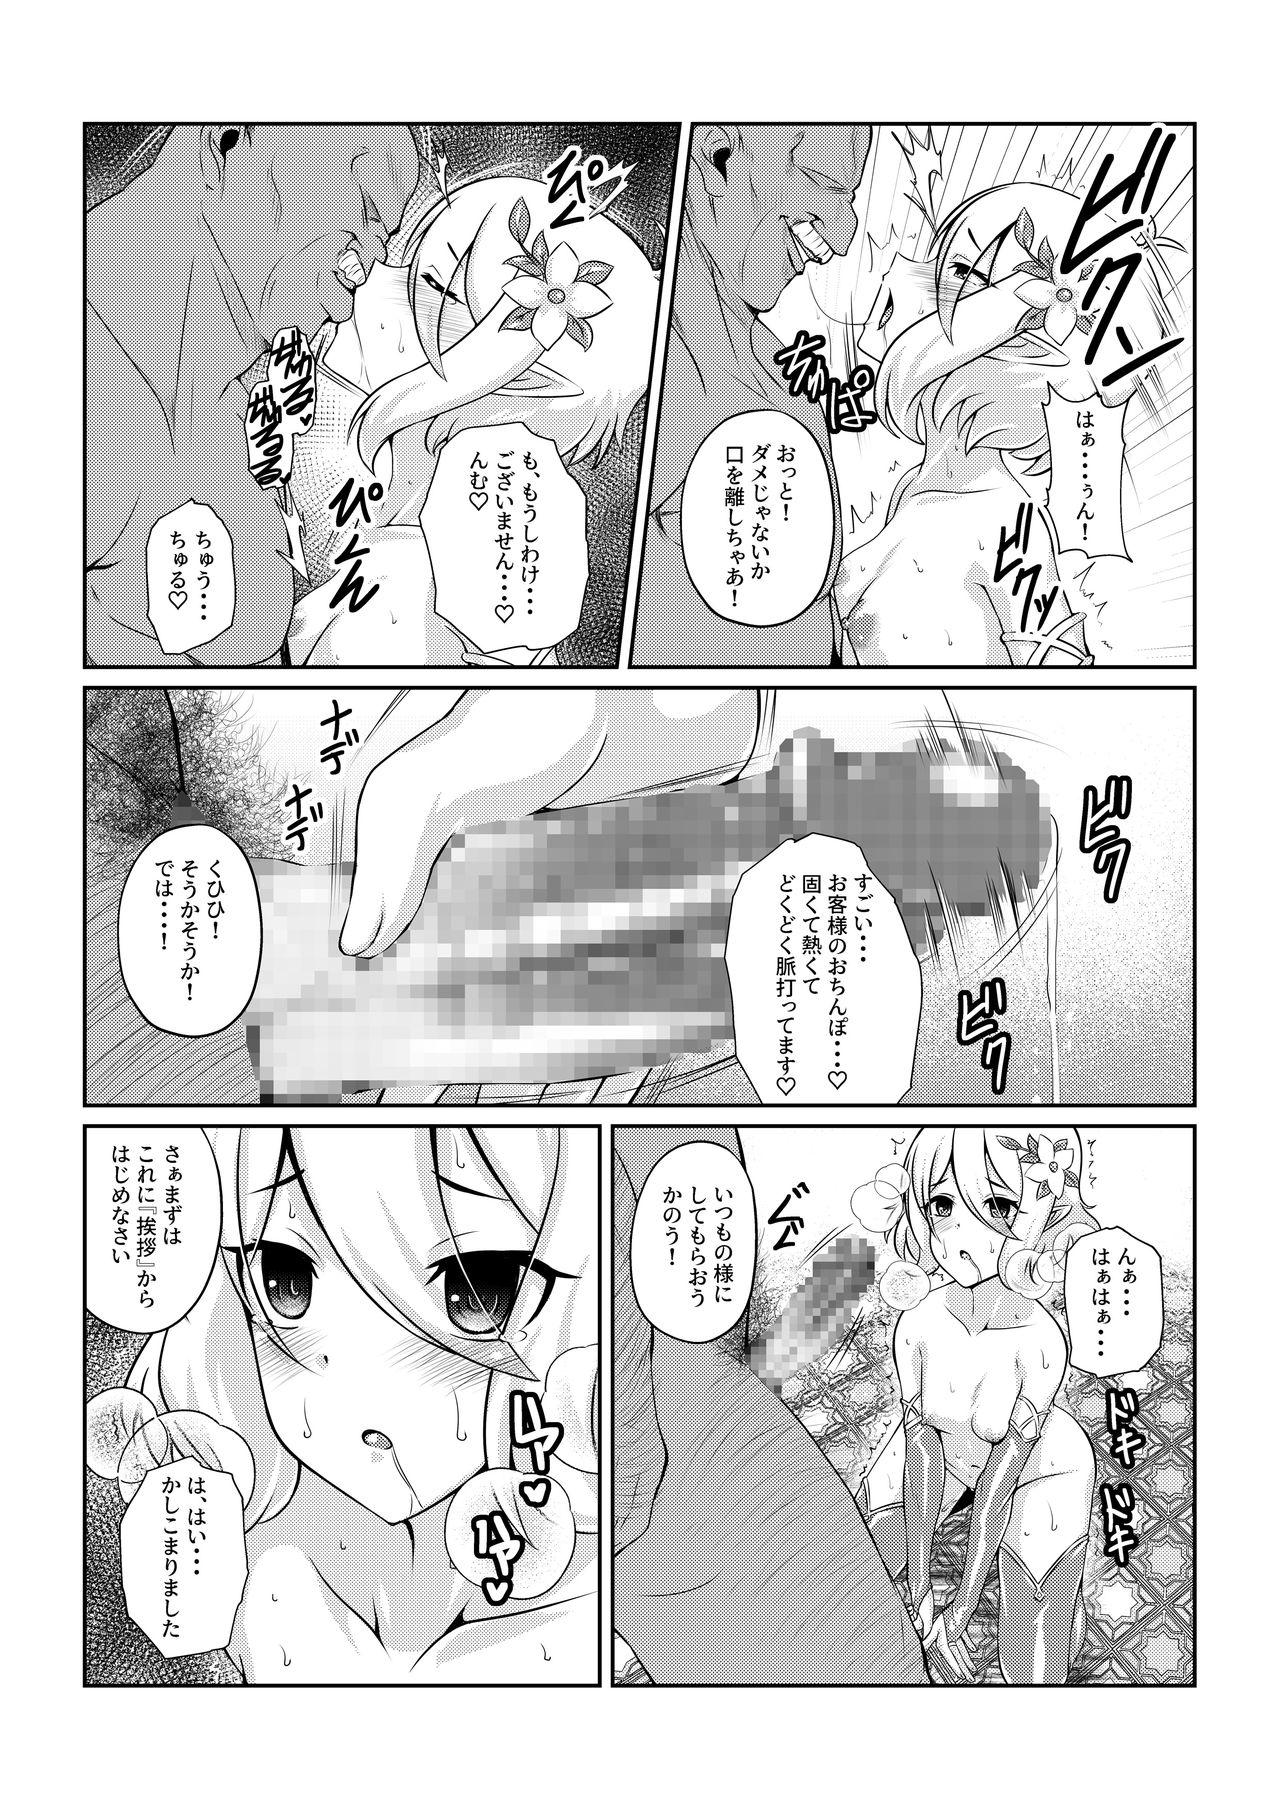 Fake Tits [Fuwa Fuwa Pinkchan] -Kokoro- (Princess Connect Re:Dive) - Princess connect Insertion - Page 5